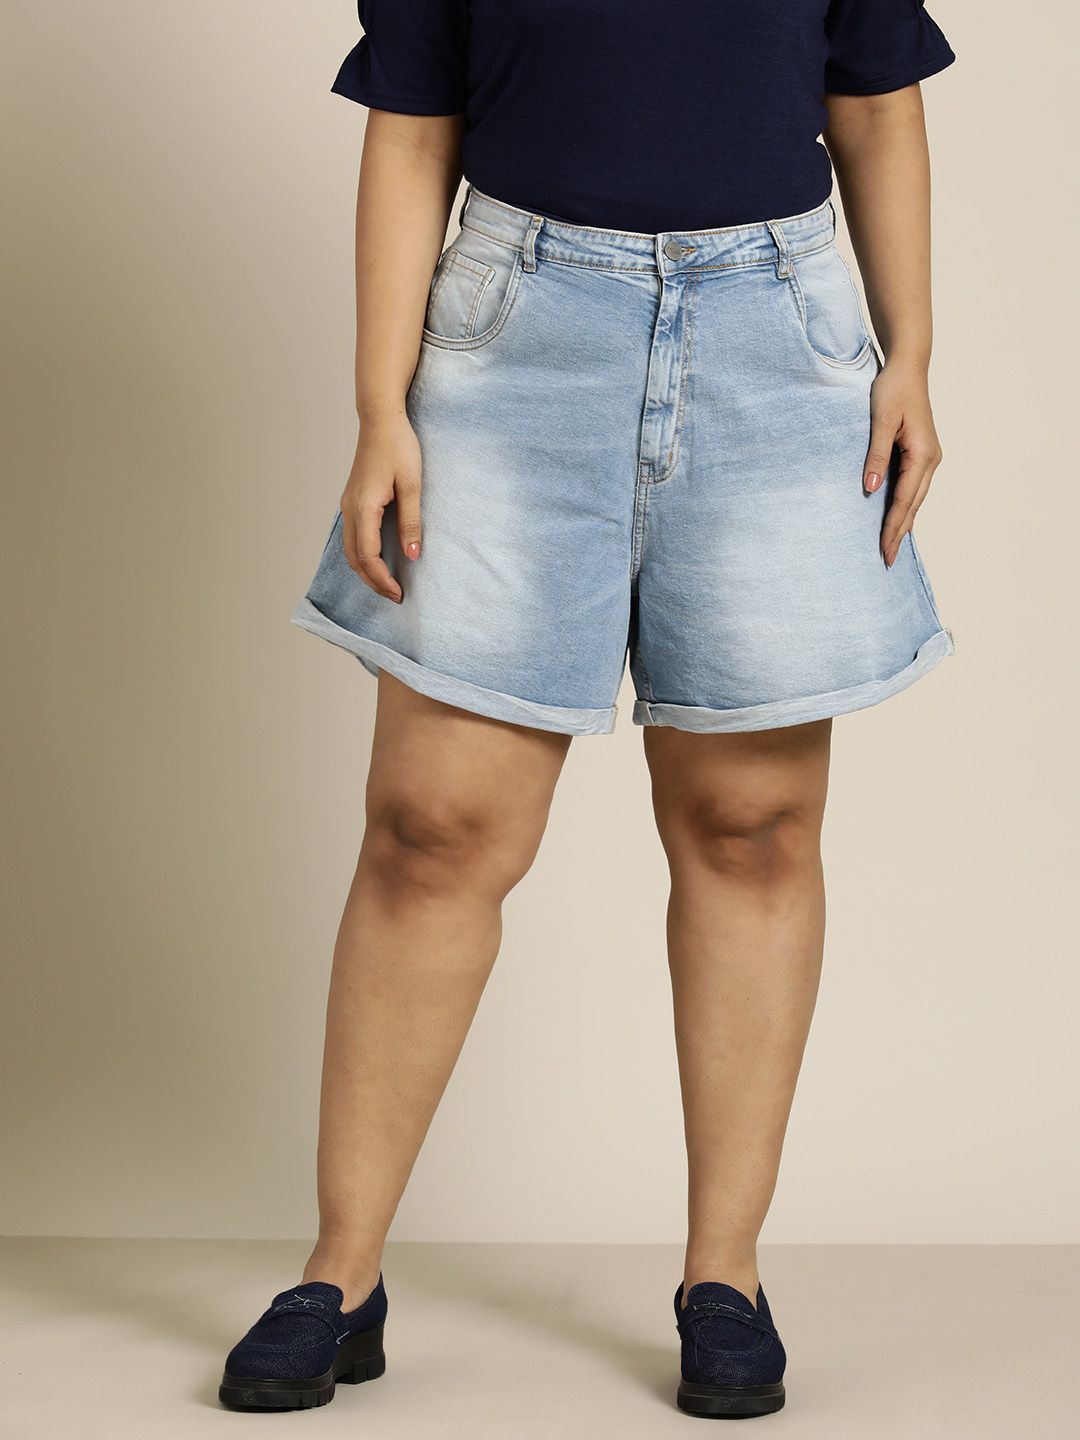 Sztori Women Plus Size Loose Fit Denim Shorts Price in India